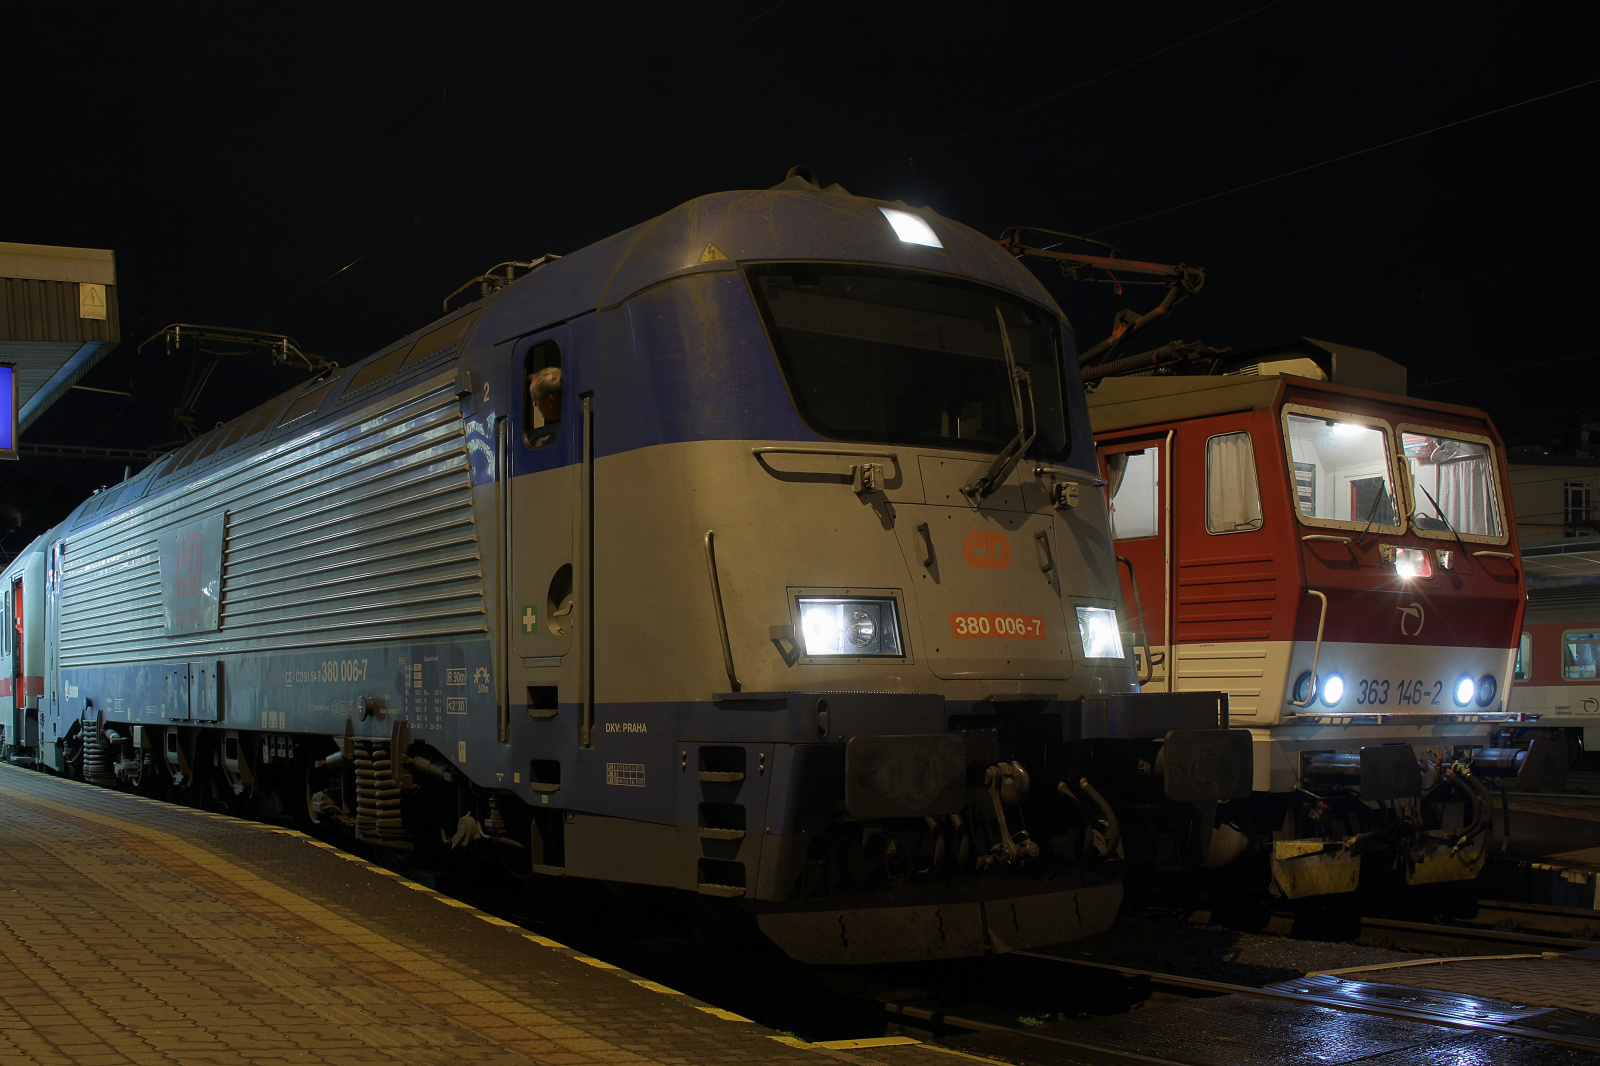 Škoda 109E 380 006-7 (Travels » Bratislava » Vehicles » Trains and Locomotives)